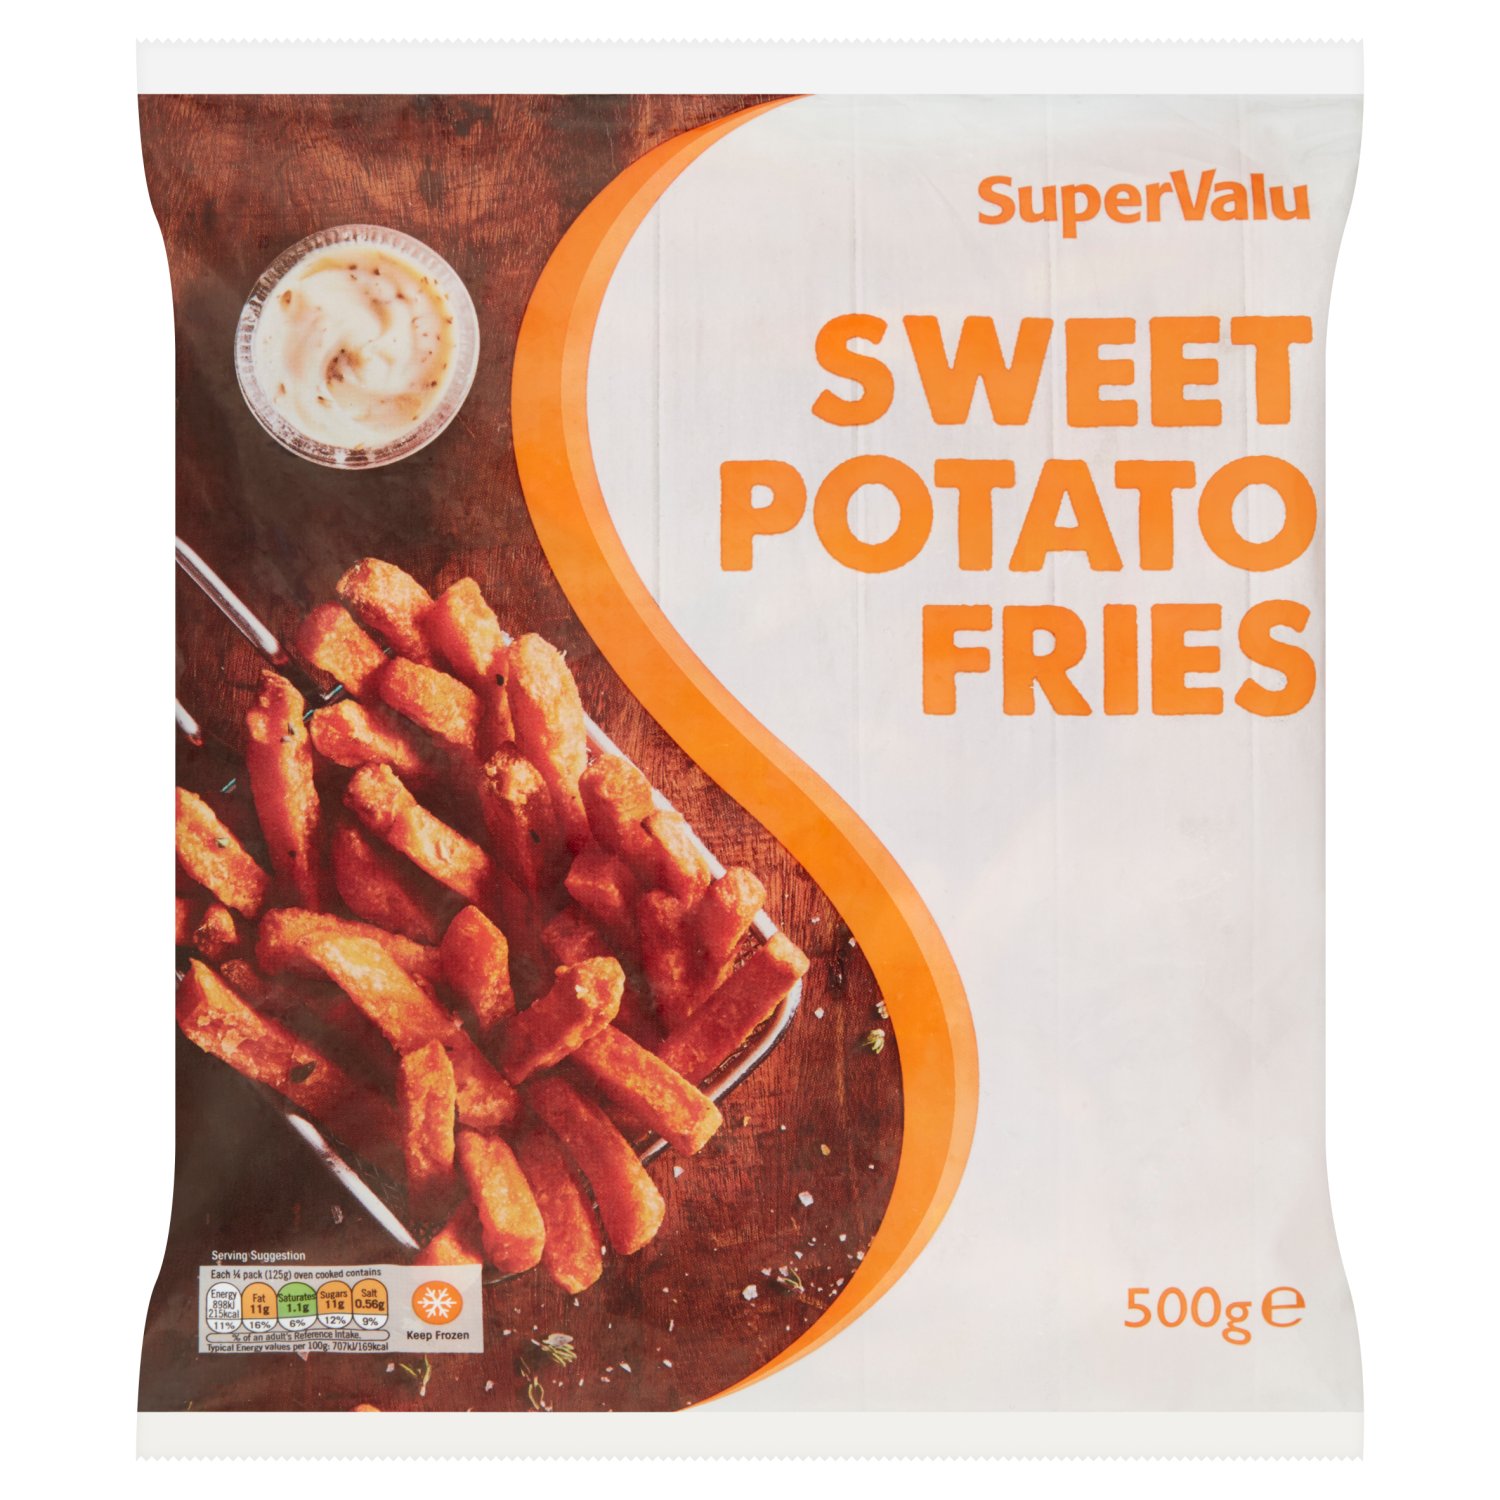 SuperValu Sweet Potato Fries (500 g)